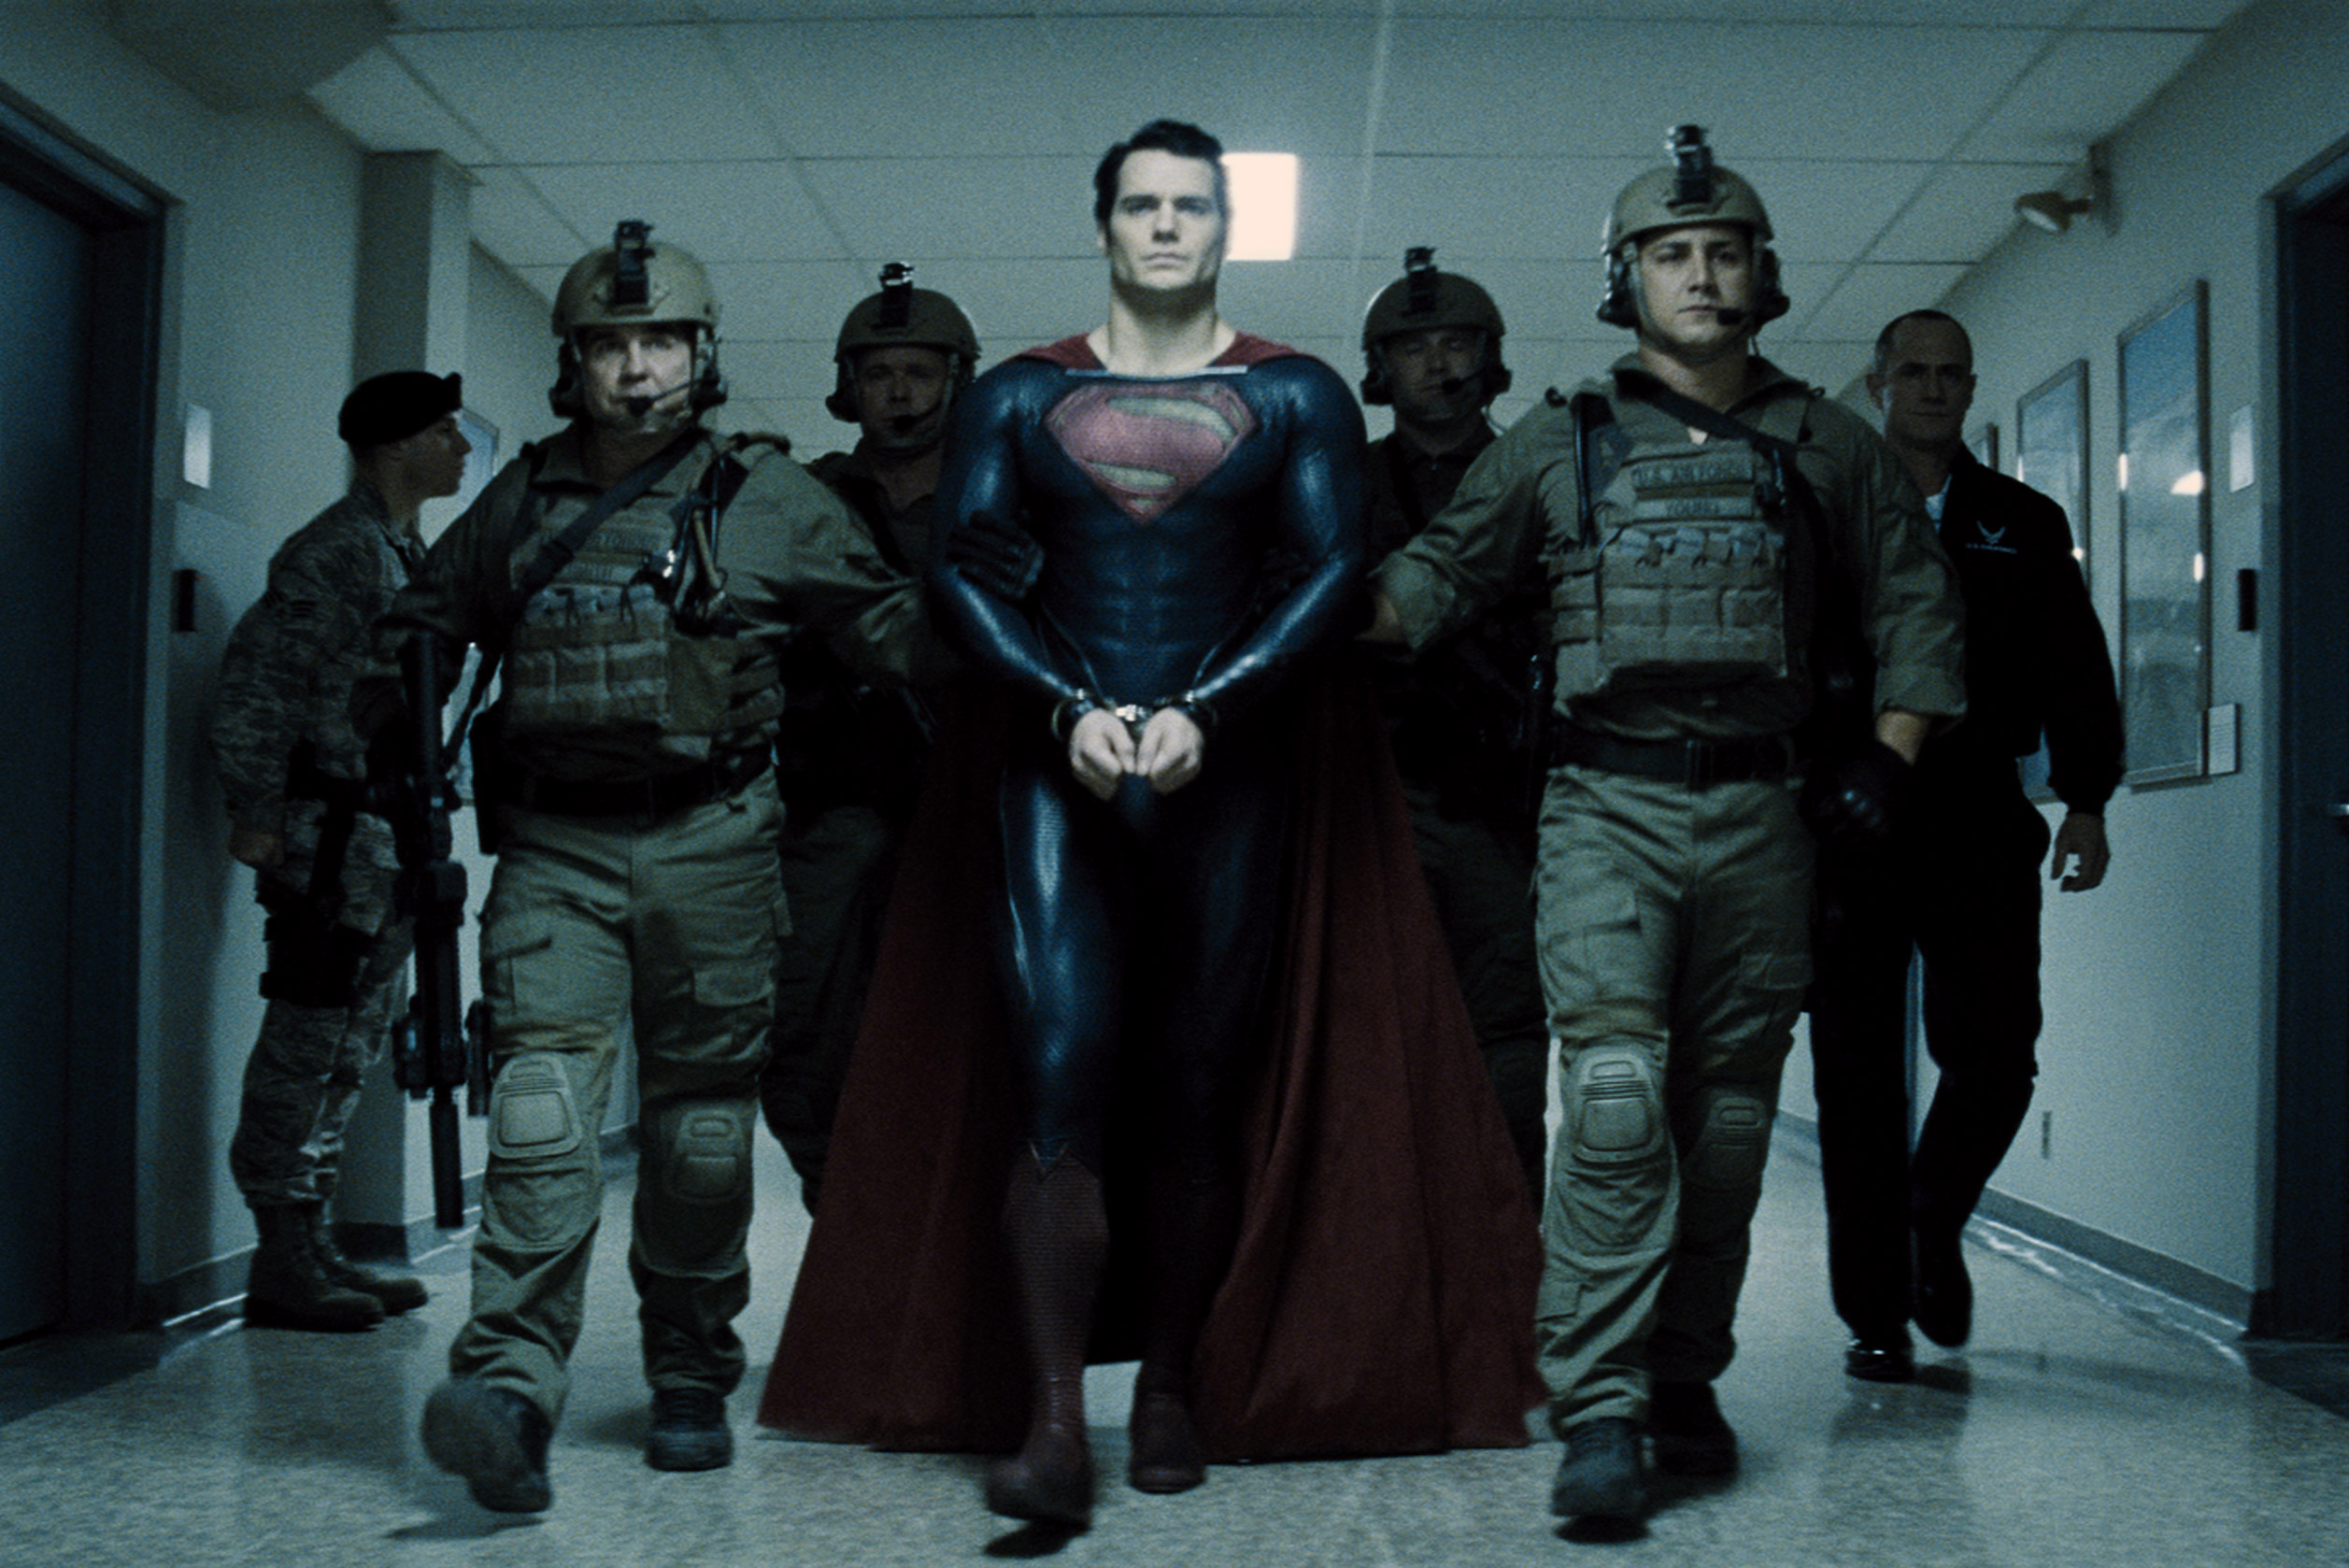 Superman-arrested-movie-scene-wallpaper1